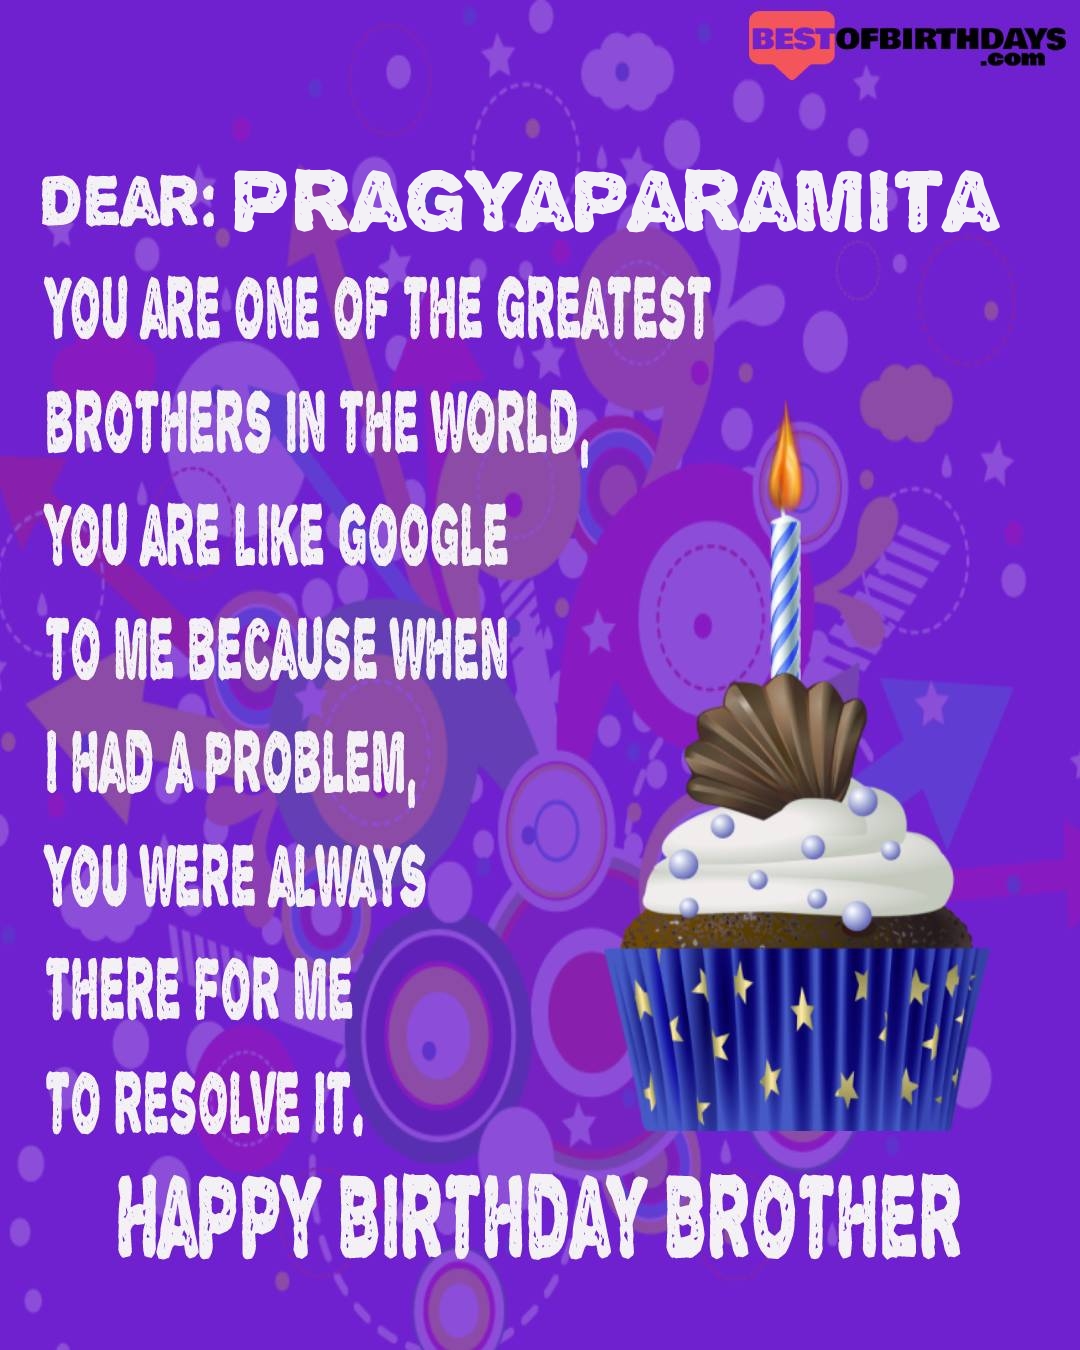 Happy birthday pragyaparamita bhai brother bro